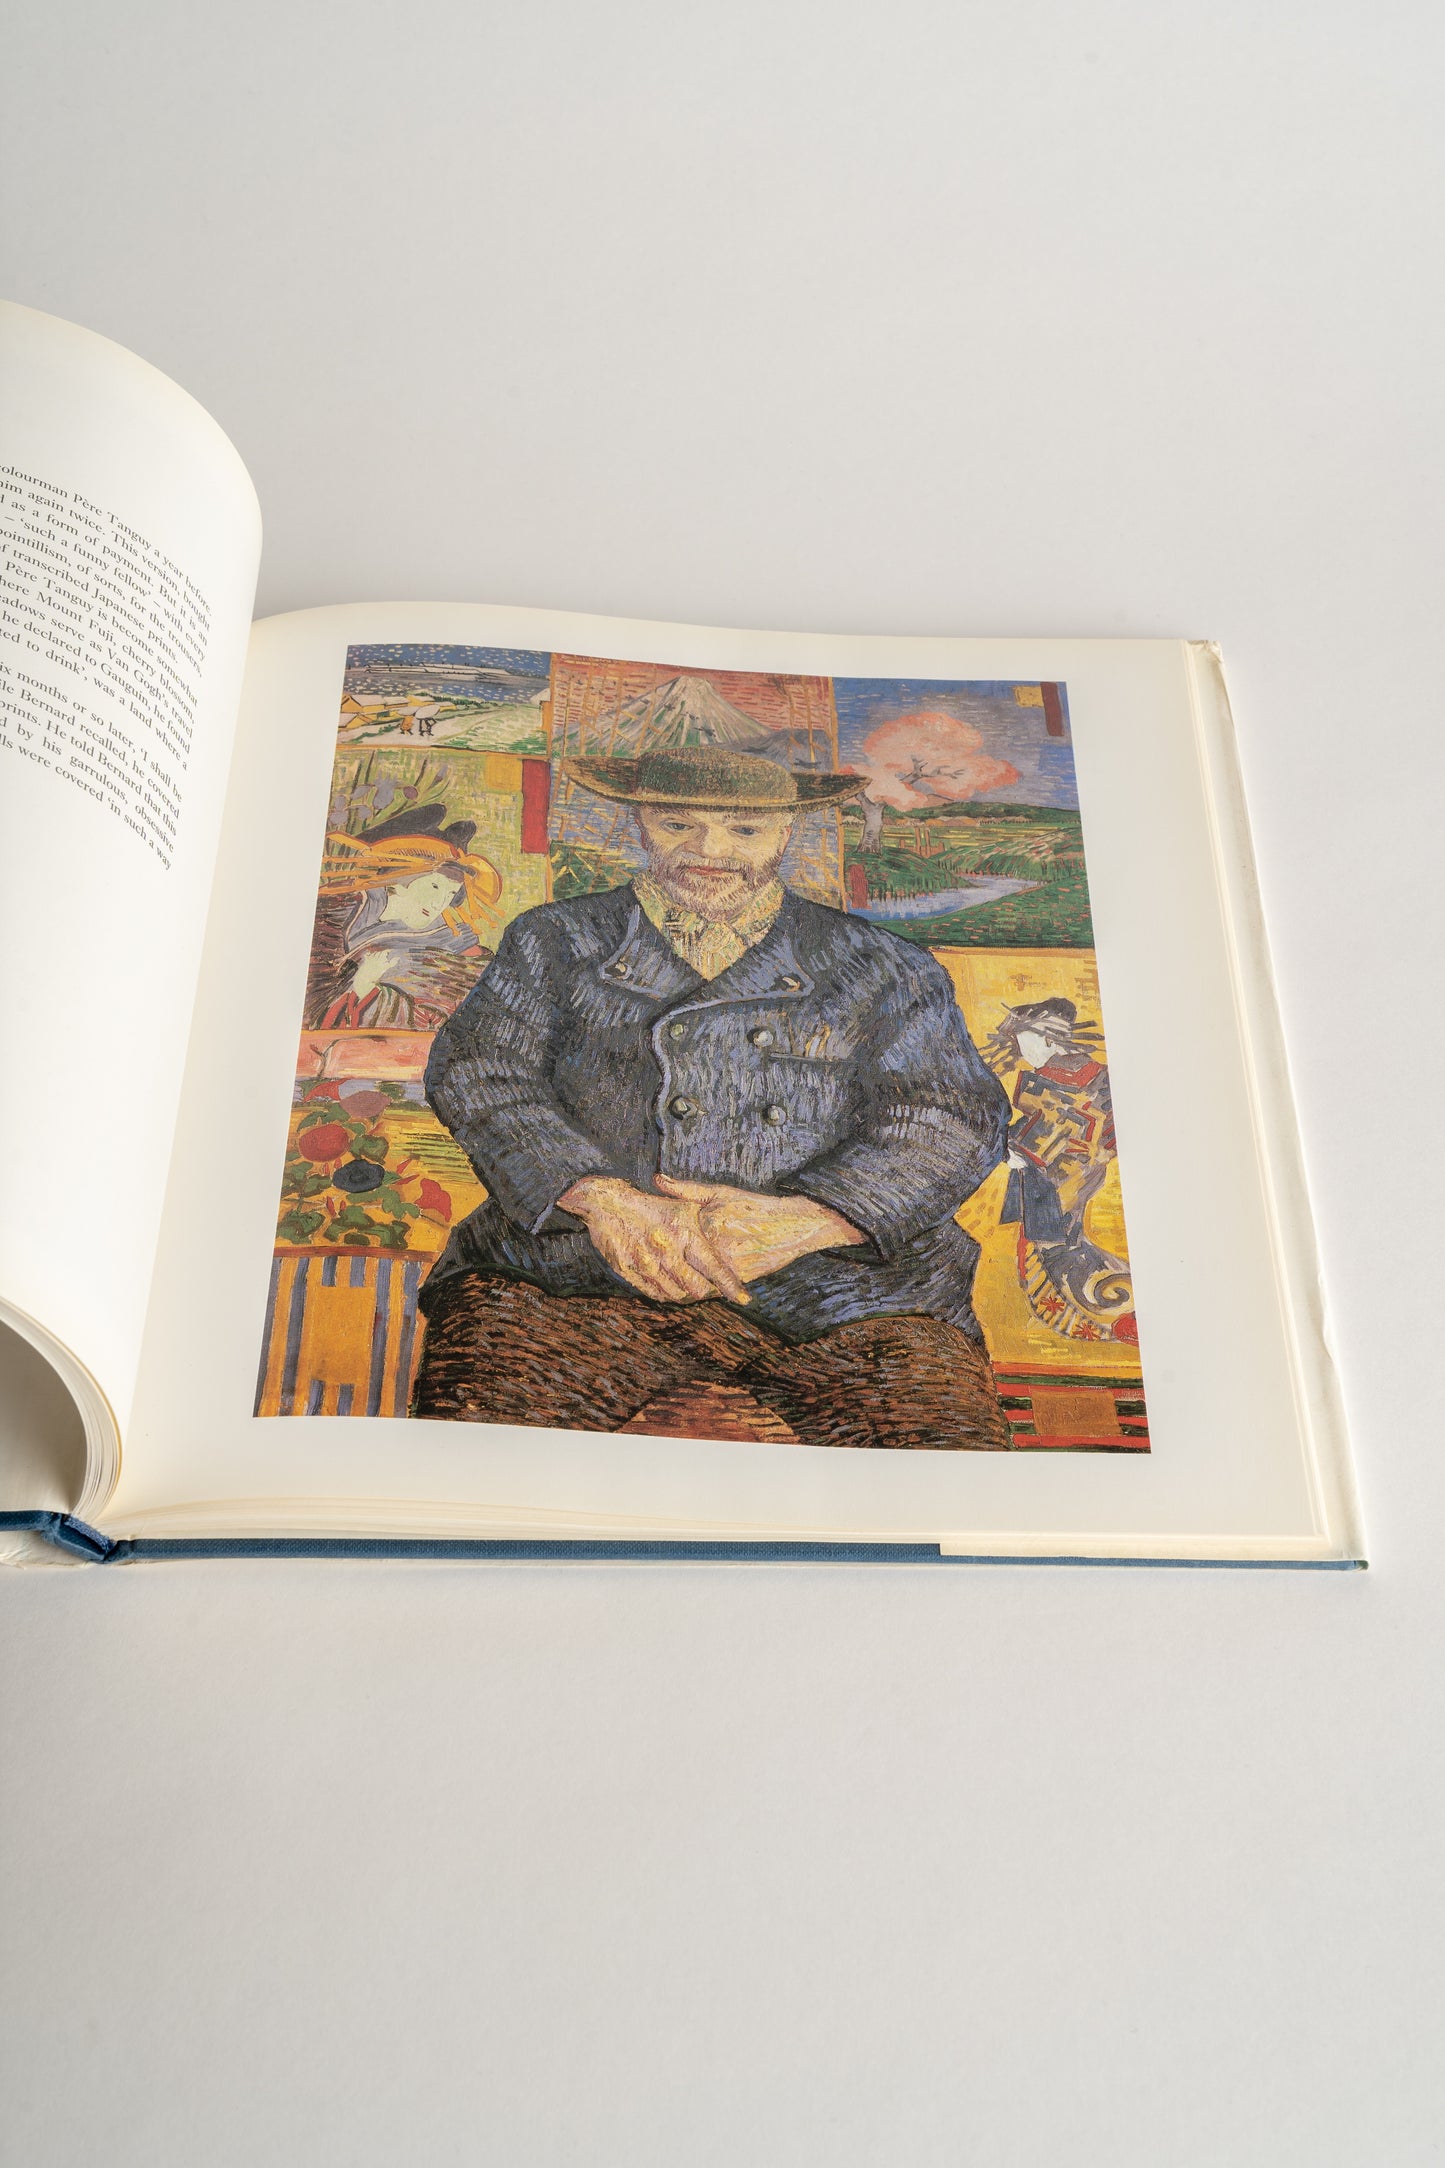 Oxfam Bookshop 'Van Gogh: The Masterworks'